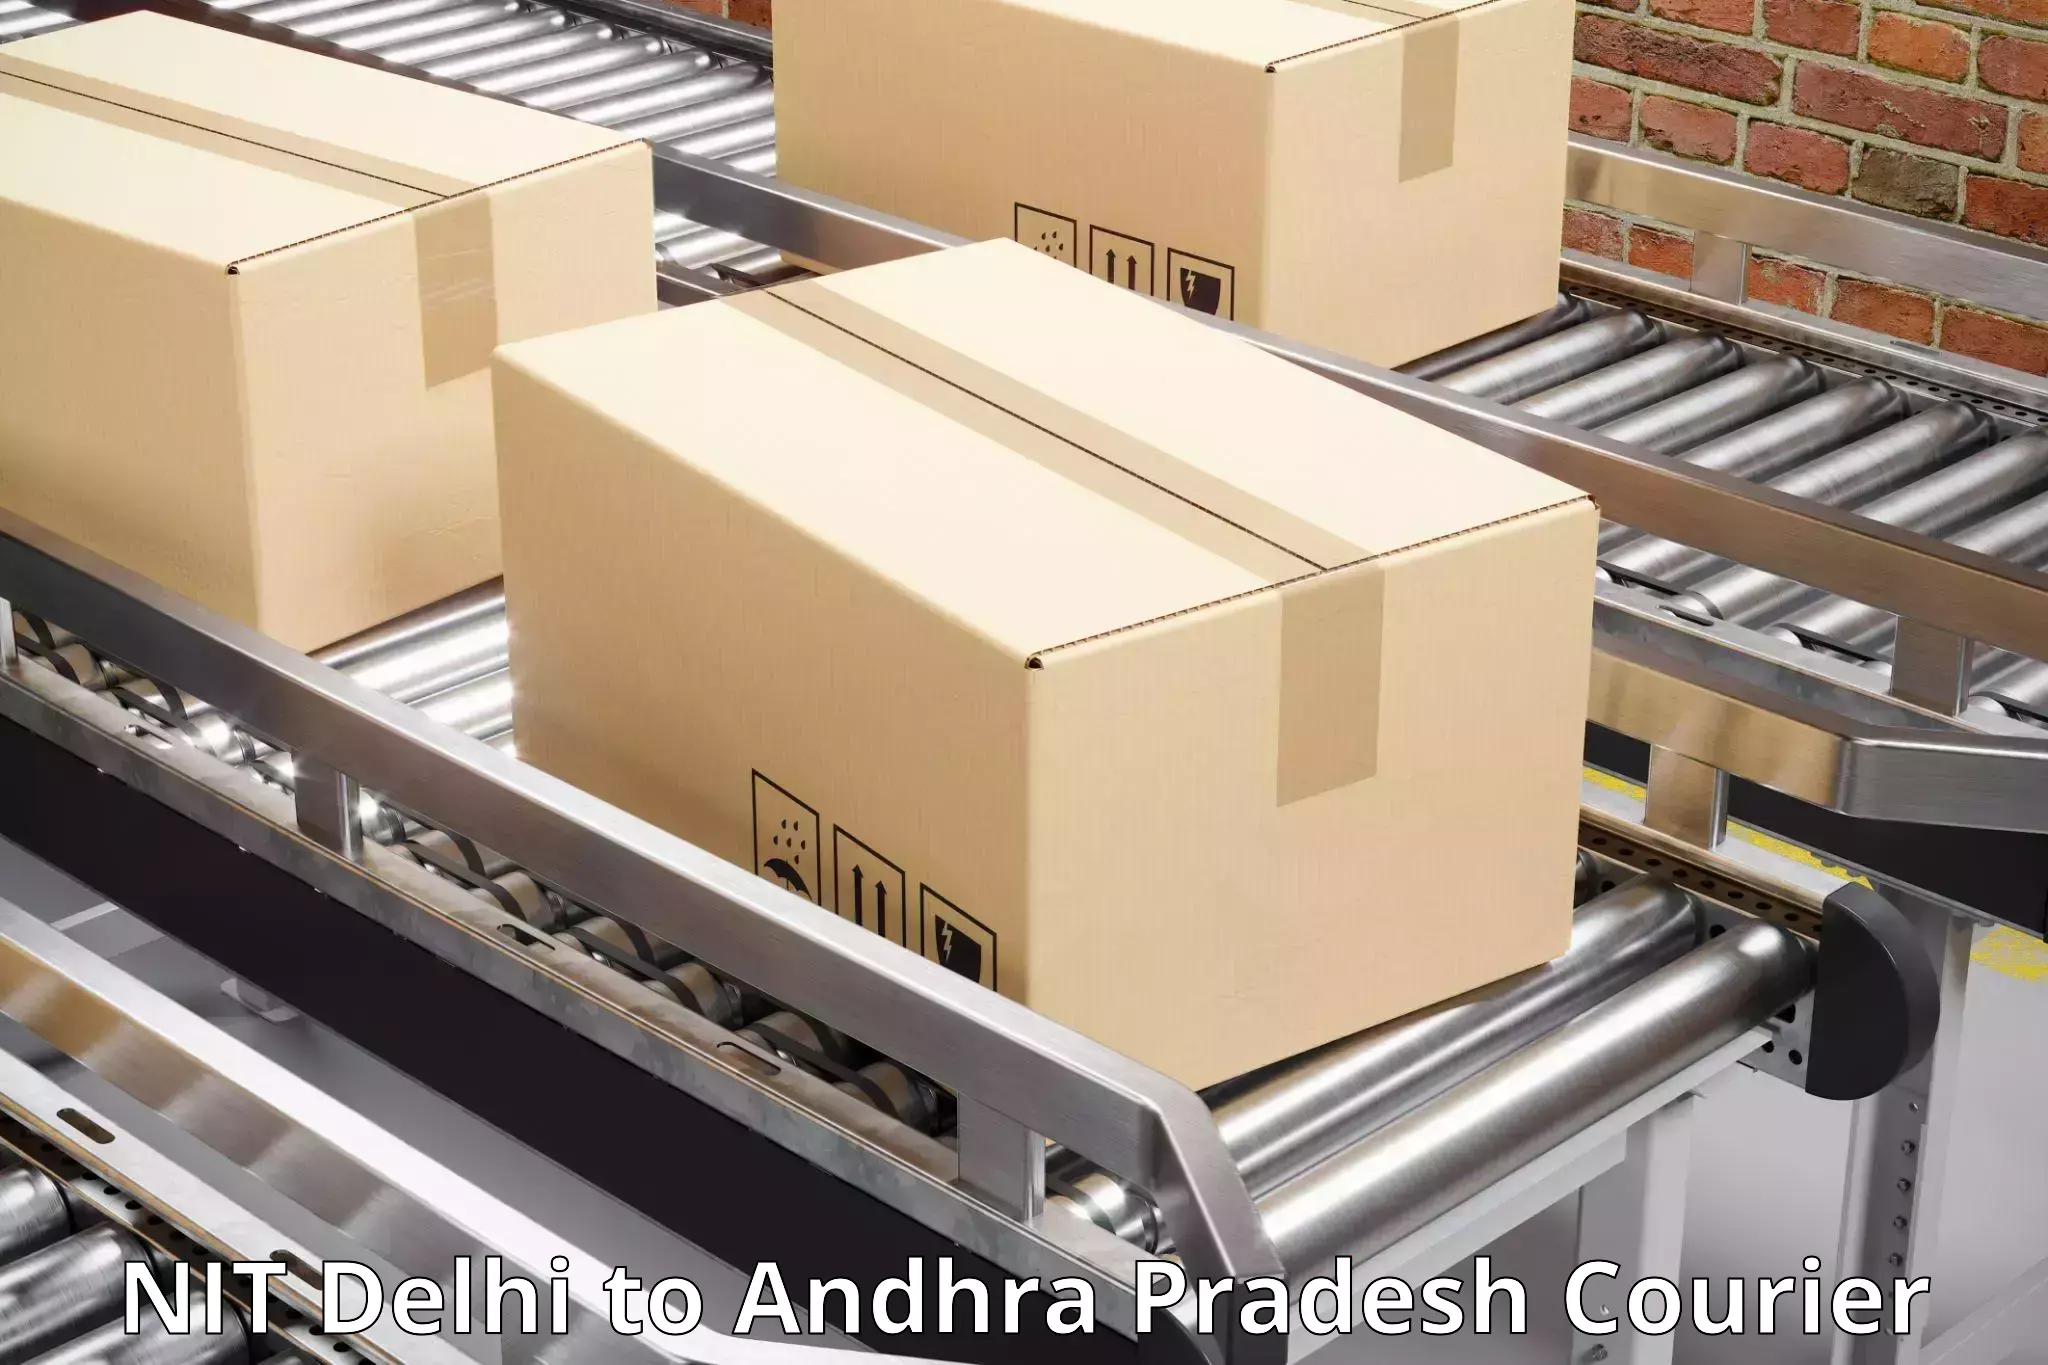 24/7 courier service NIT Delhi to Andhra Pradesh